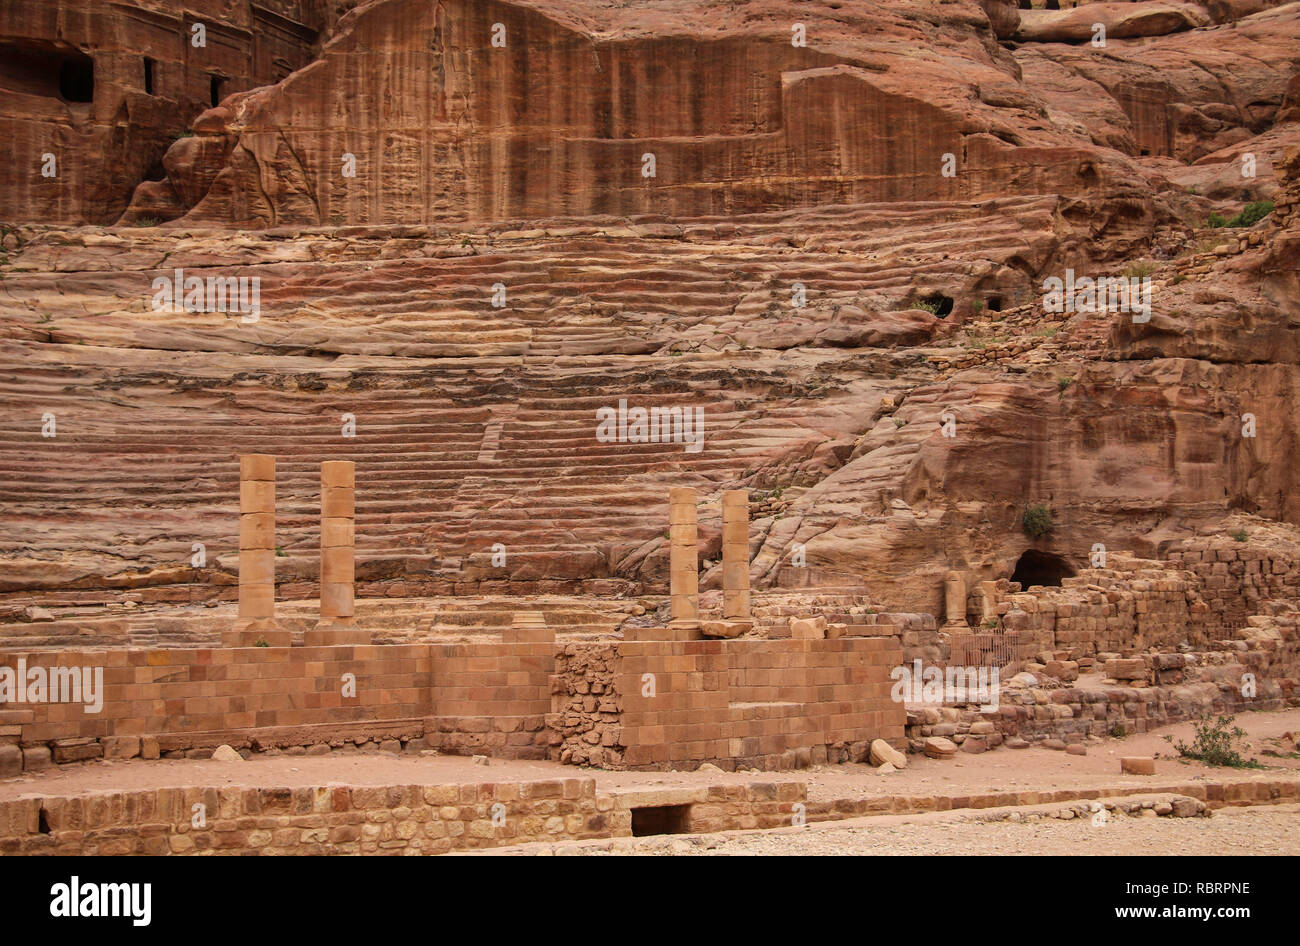 Roman theater in the ancient Arab Nabataean Kingdom city of Petra. Jordan Stock Photo